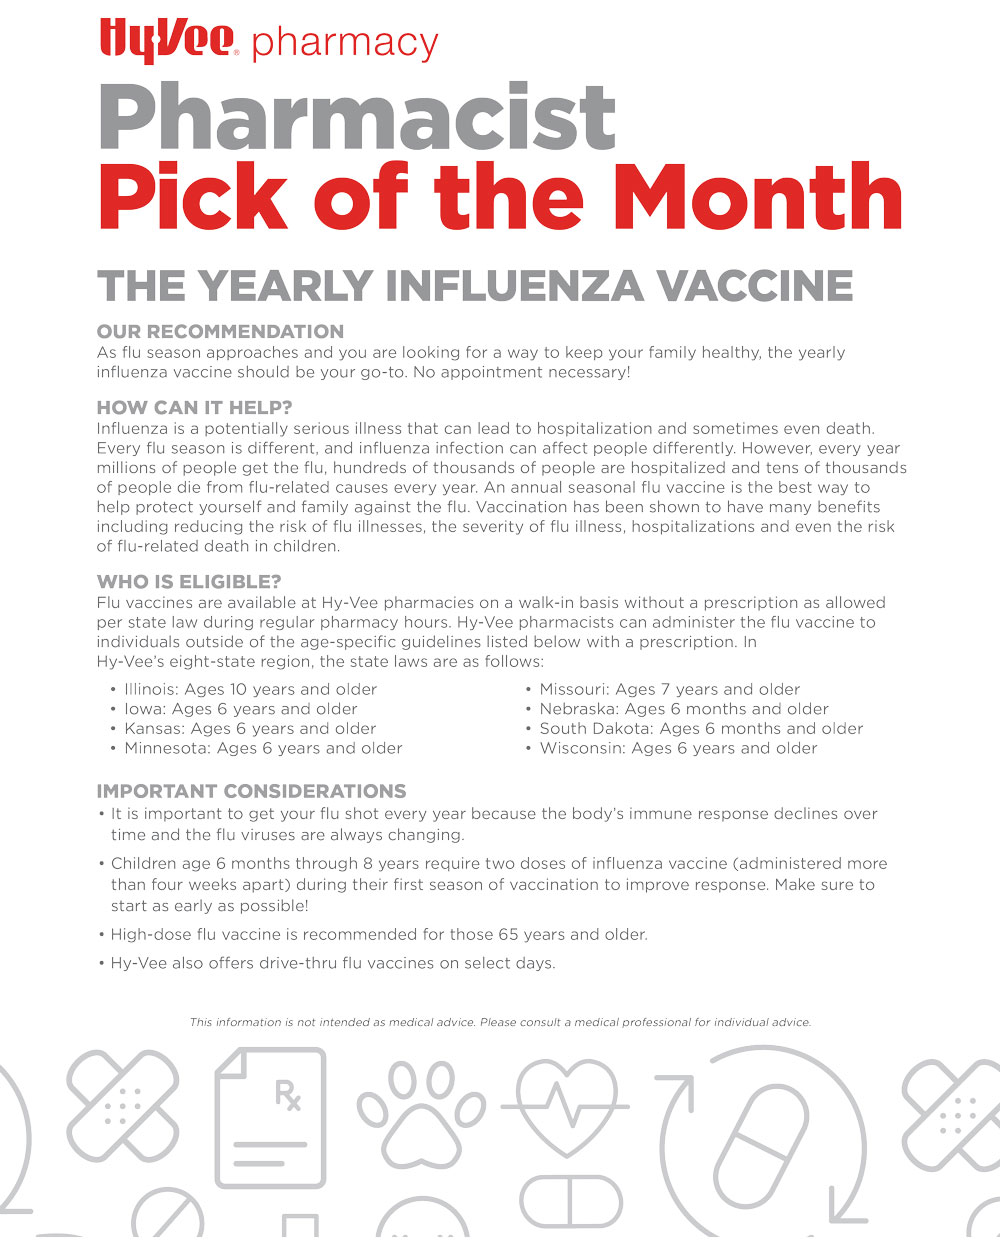 September Pharmacist's Pick - The Yearly Influenza Vaccine